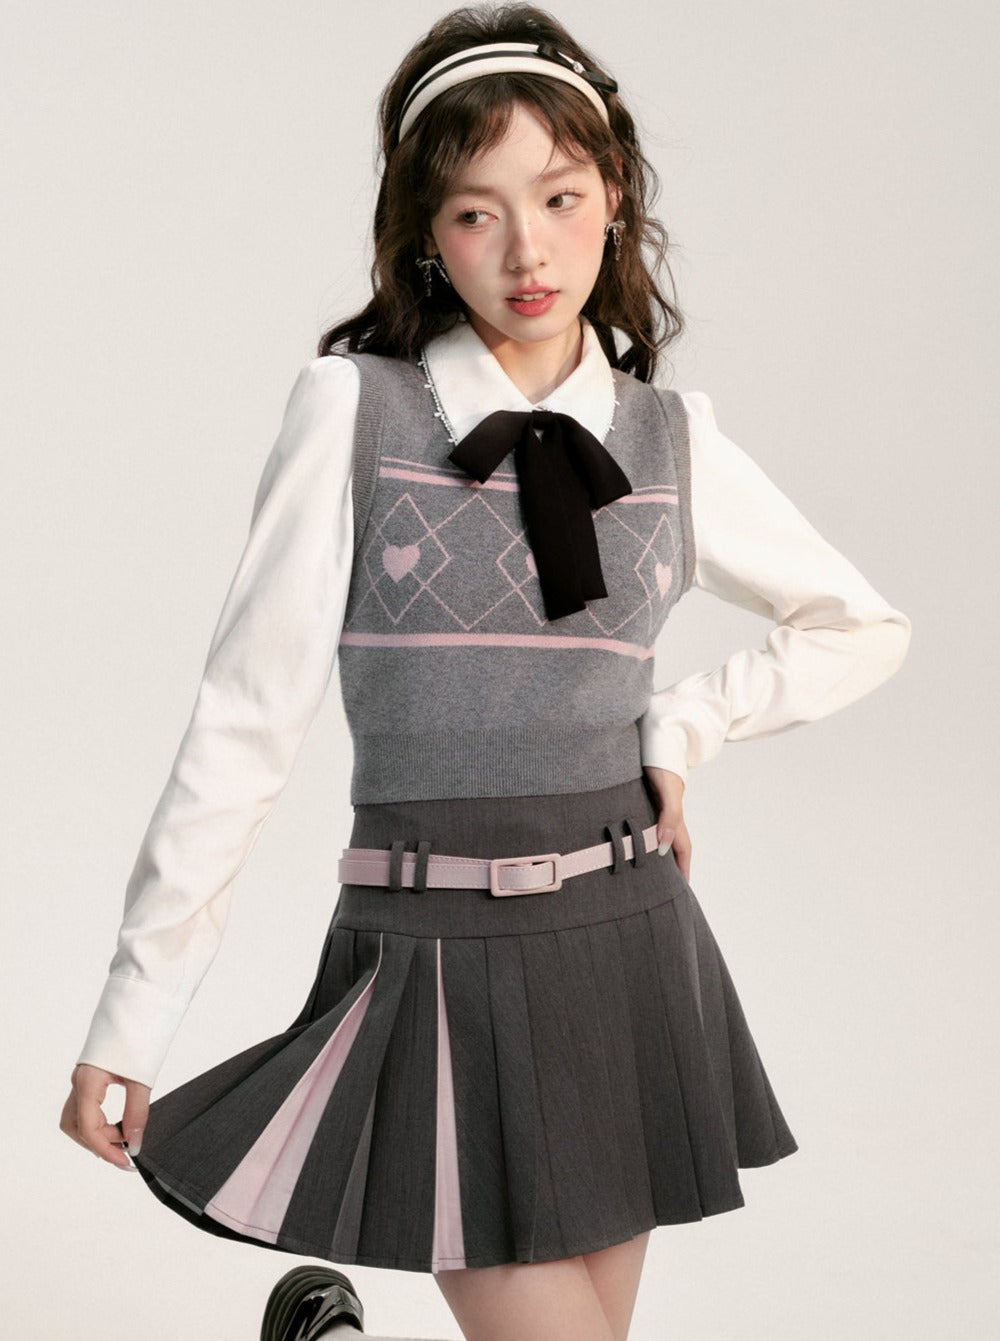 Pleated skirt + pink belt